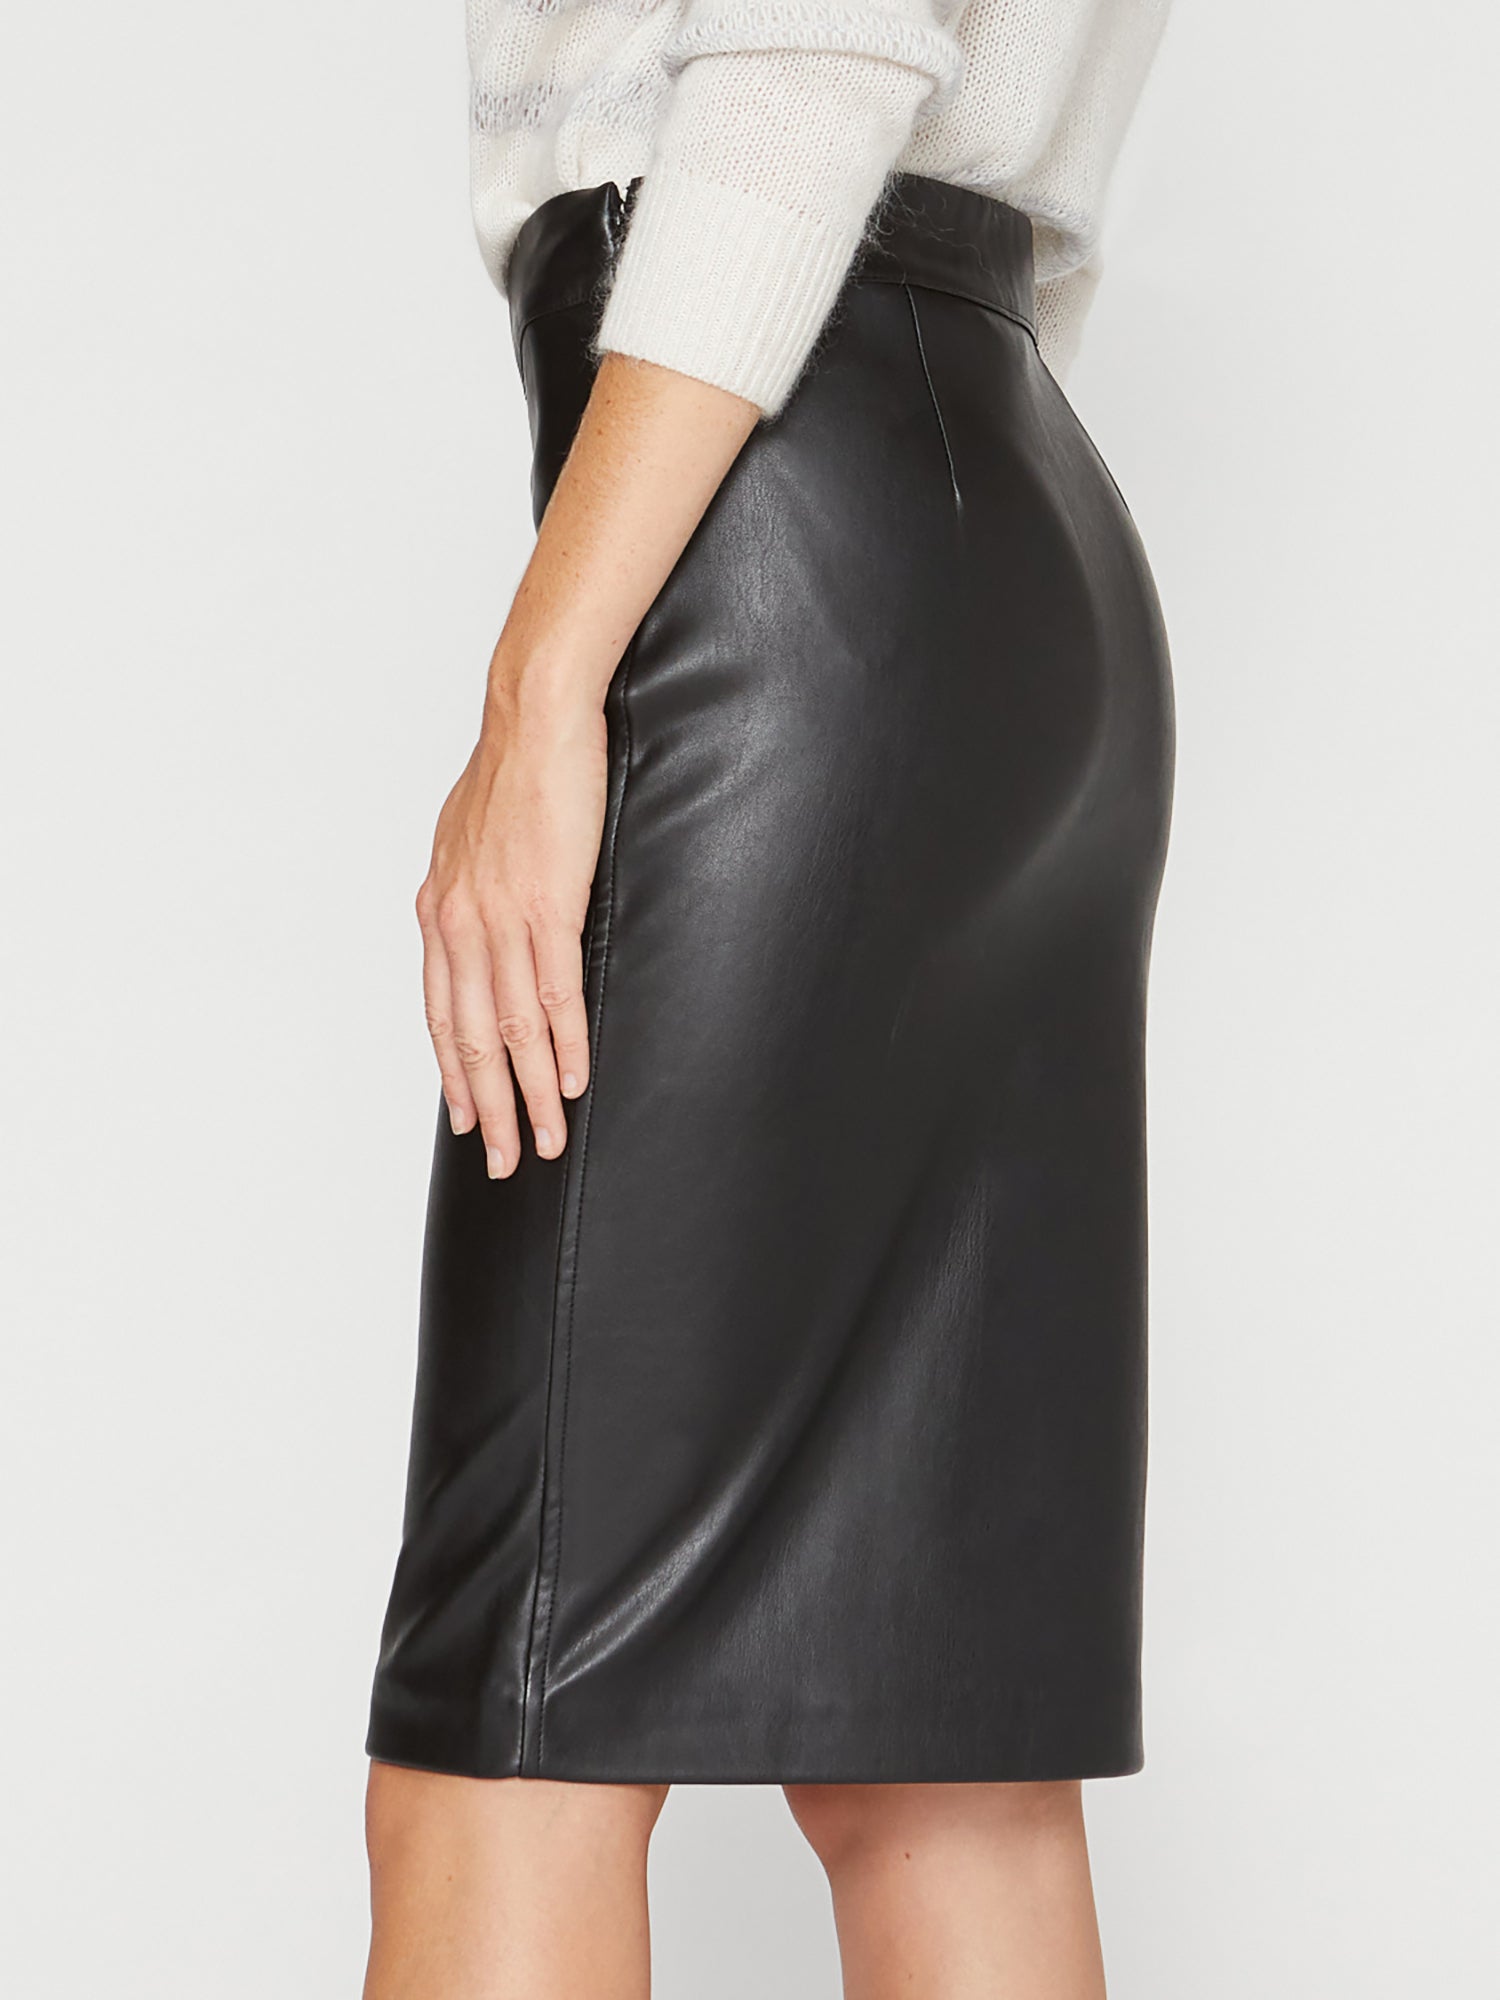 Drew black vegan leather knee-length pencil skirt side view